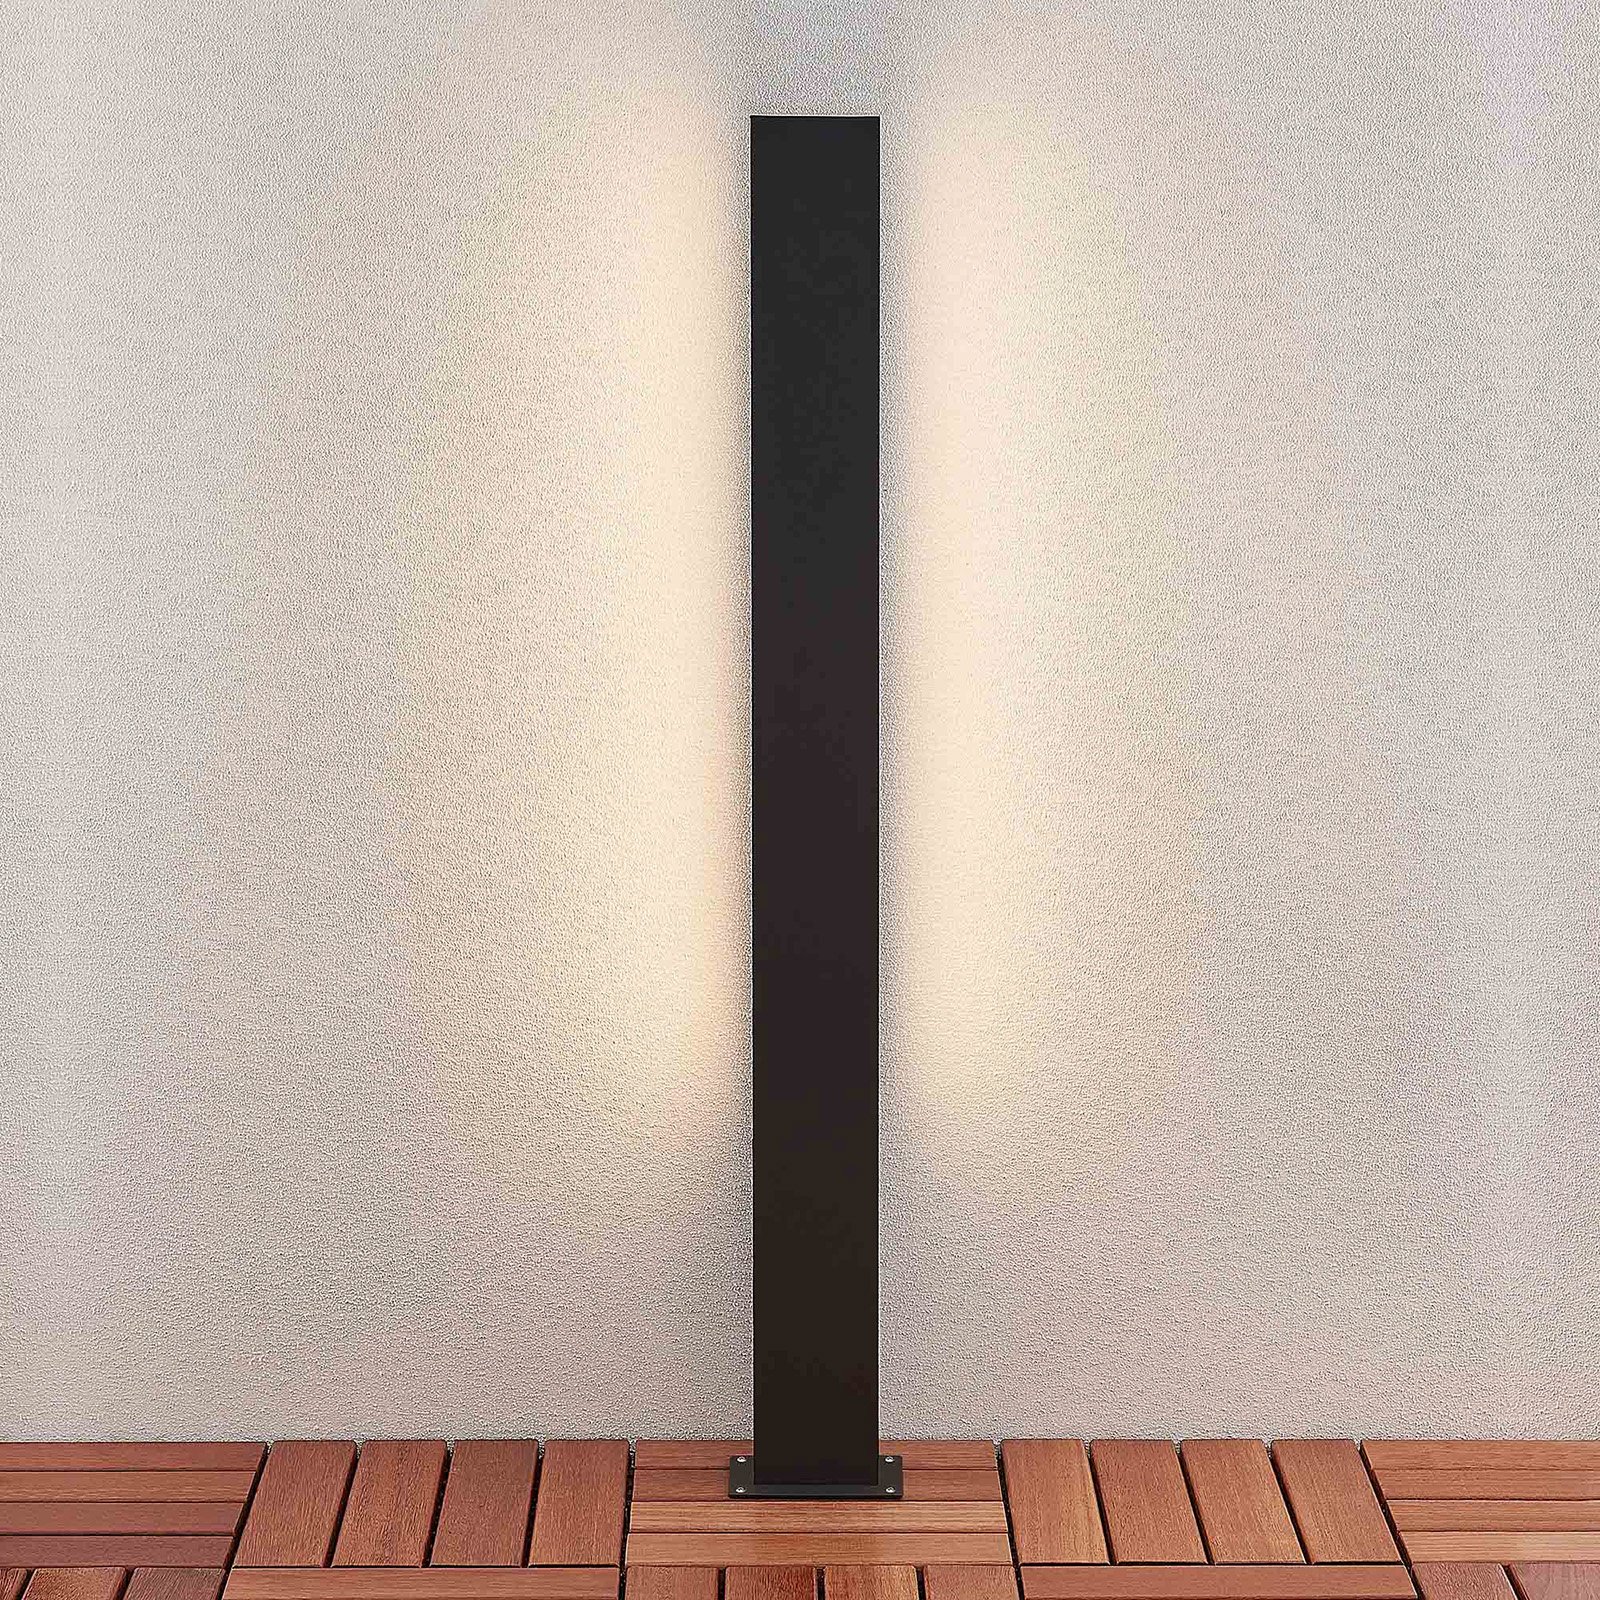 Lucande Aegisa LED ösvény lámpa, 110 cm